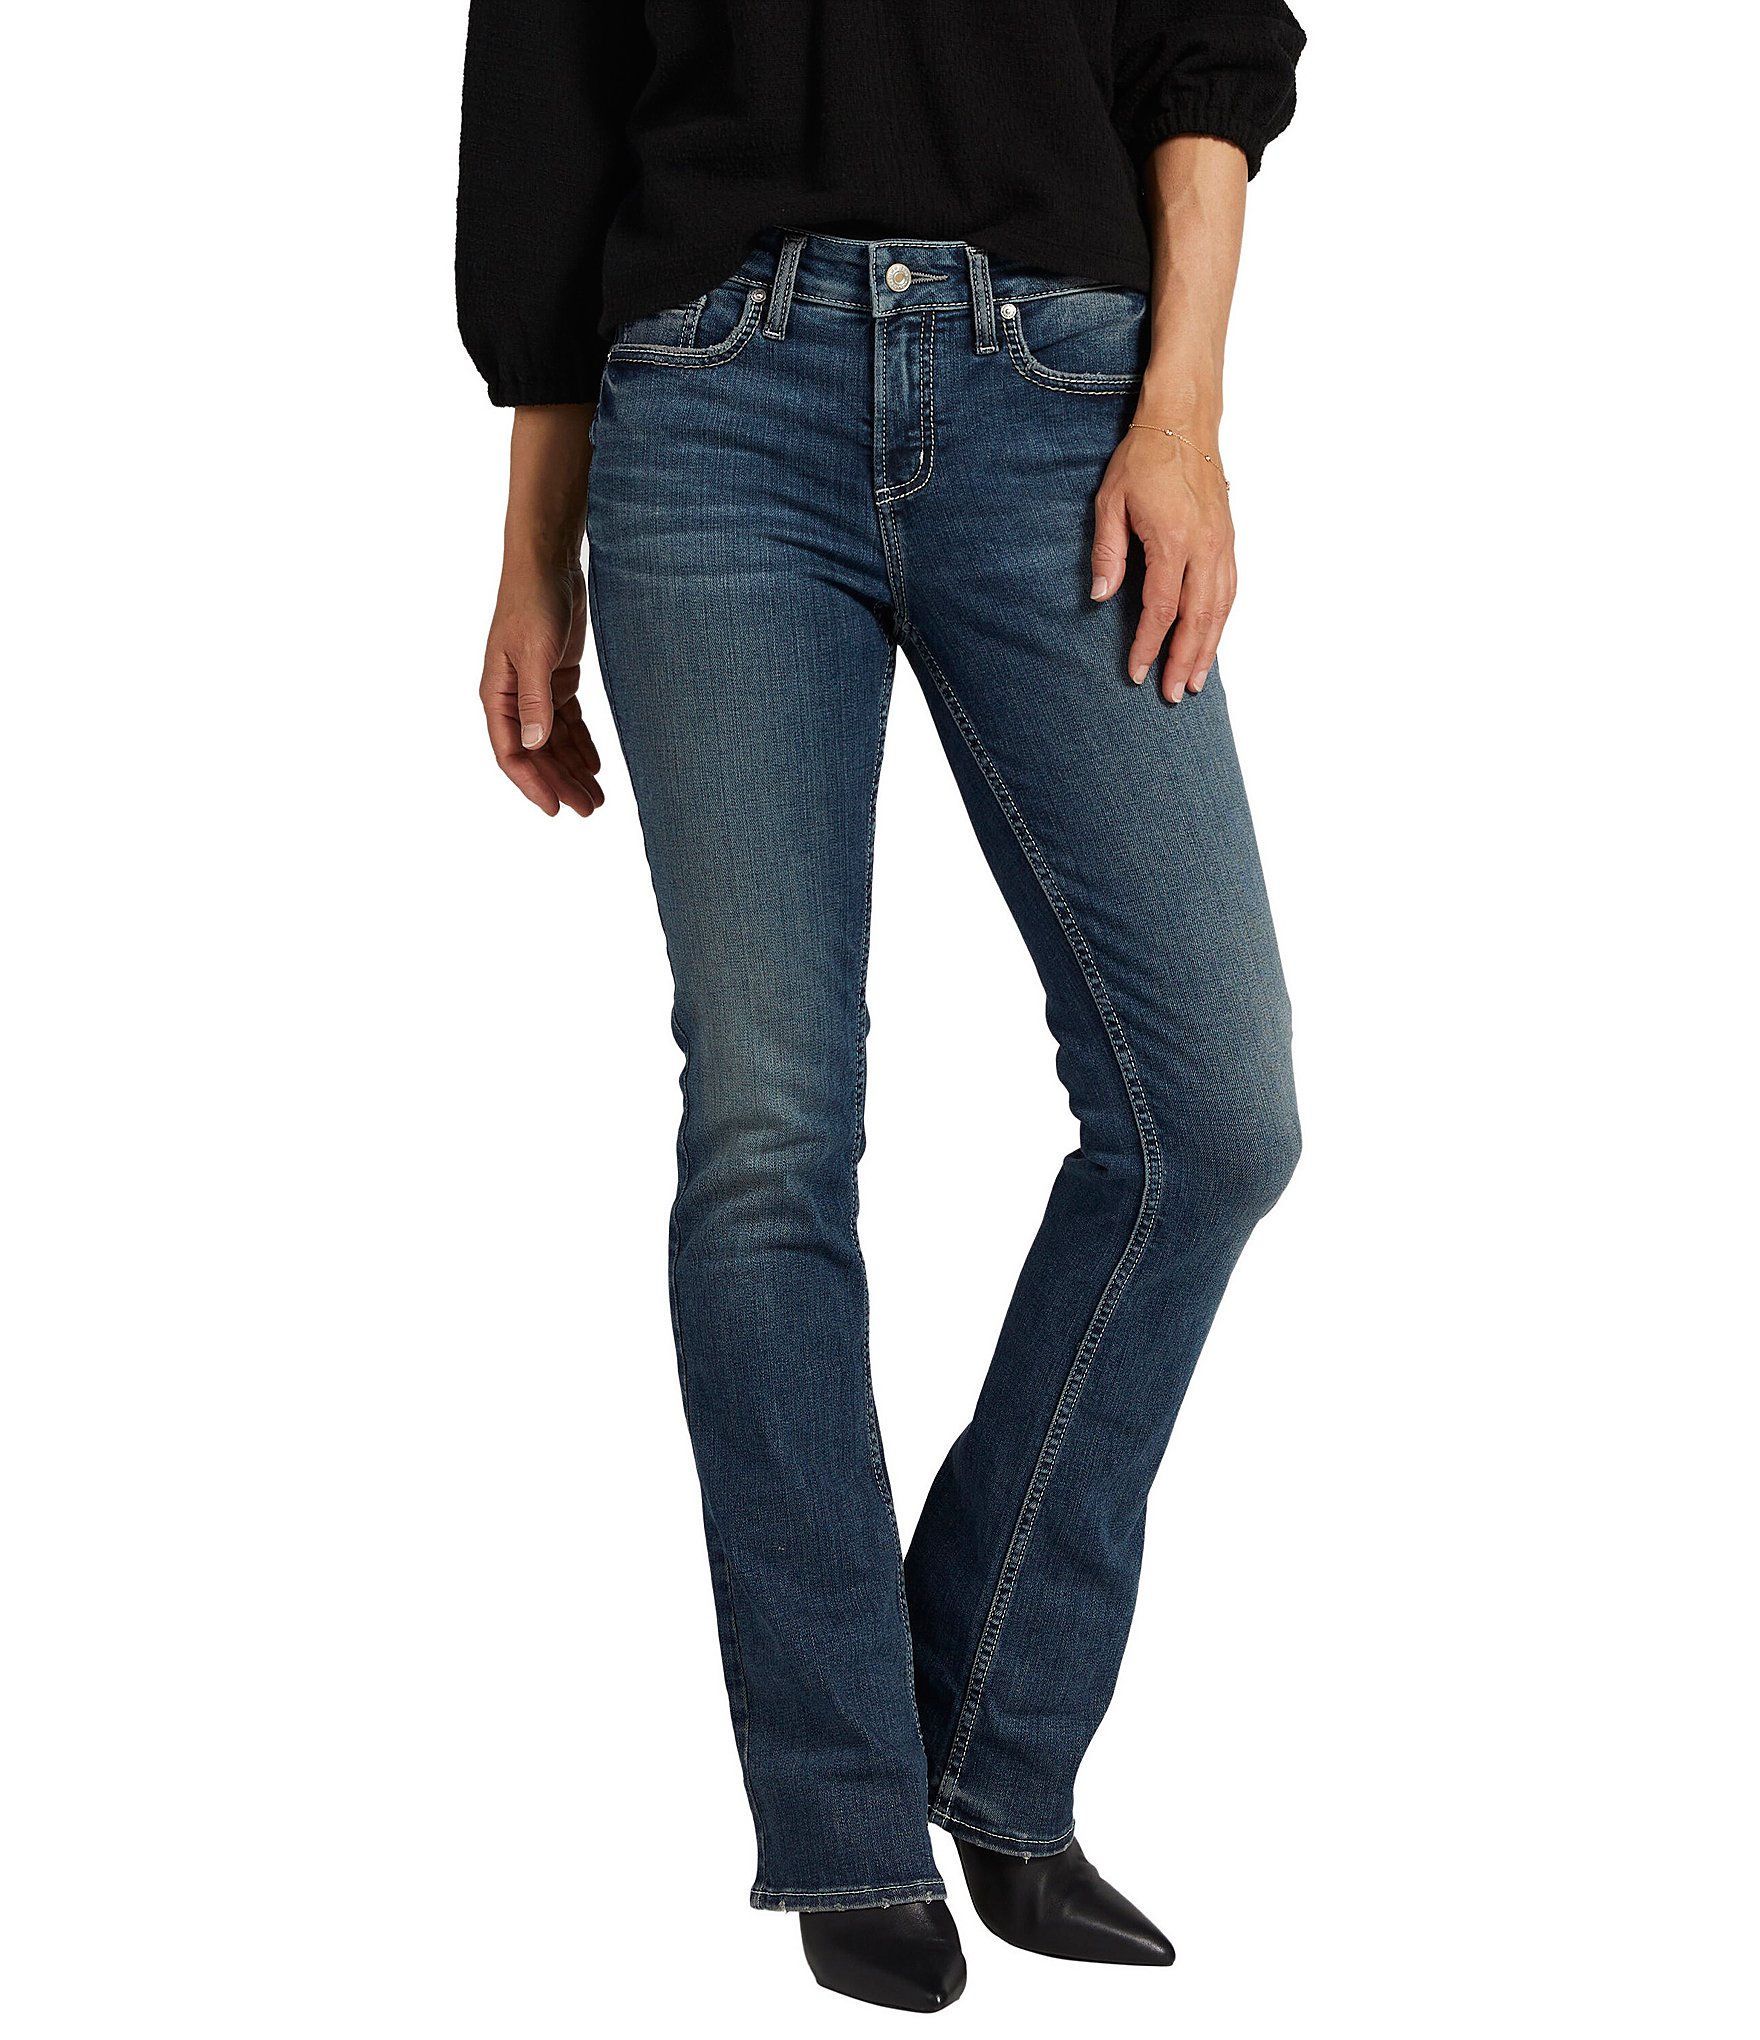 Silver Jeans Co. Plus Size Avery High Rise Wide Leg Trouser Jeans |  Dillard's